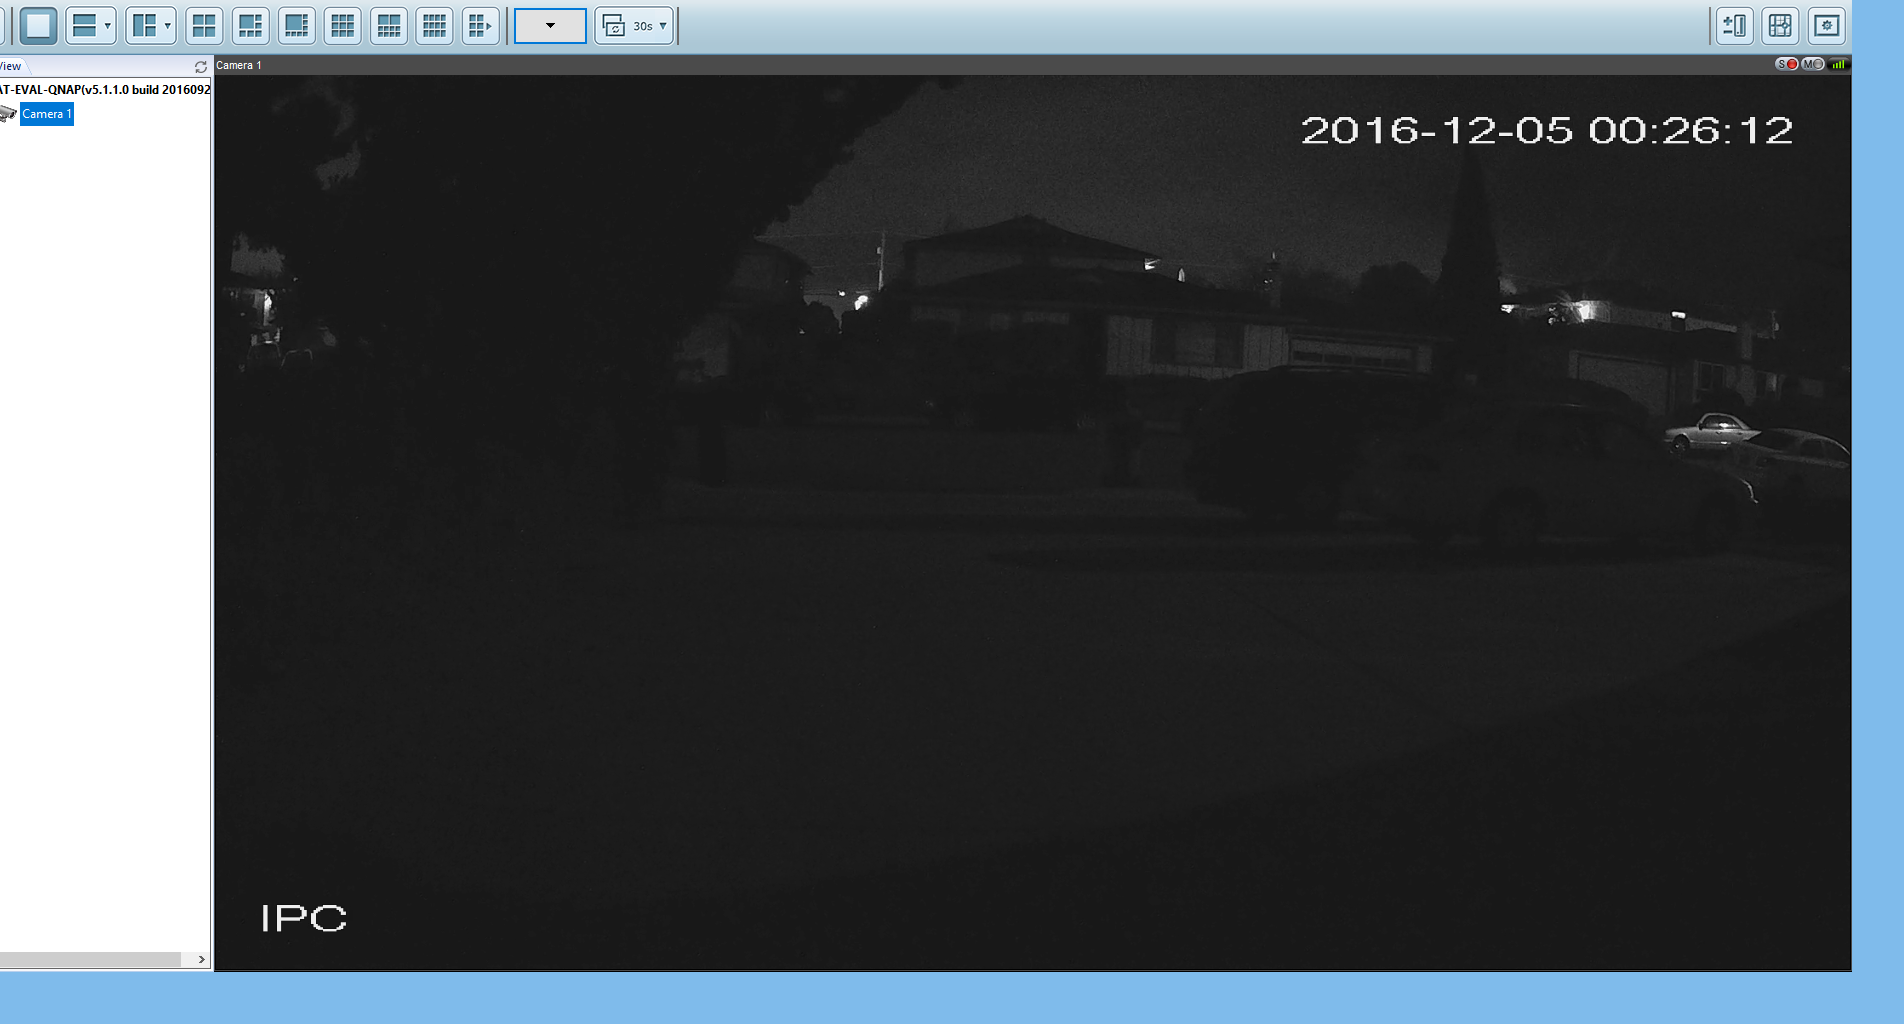 qnap surveillance station video generic camera